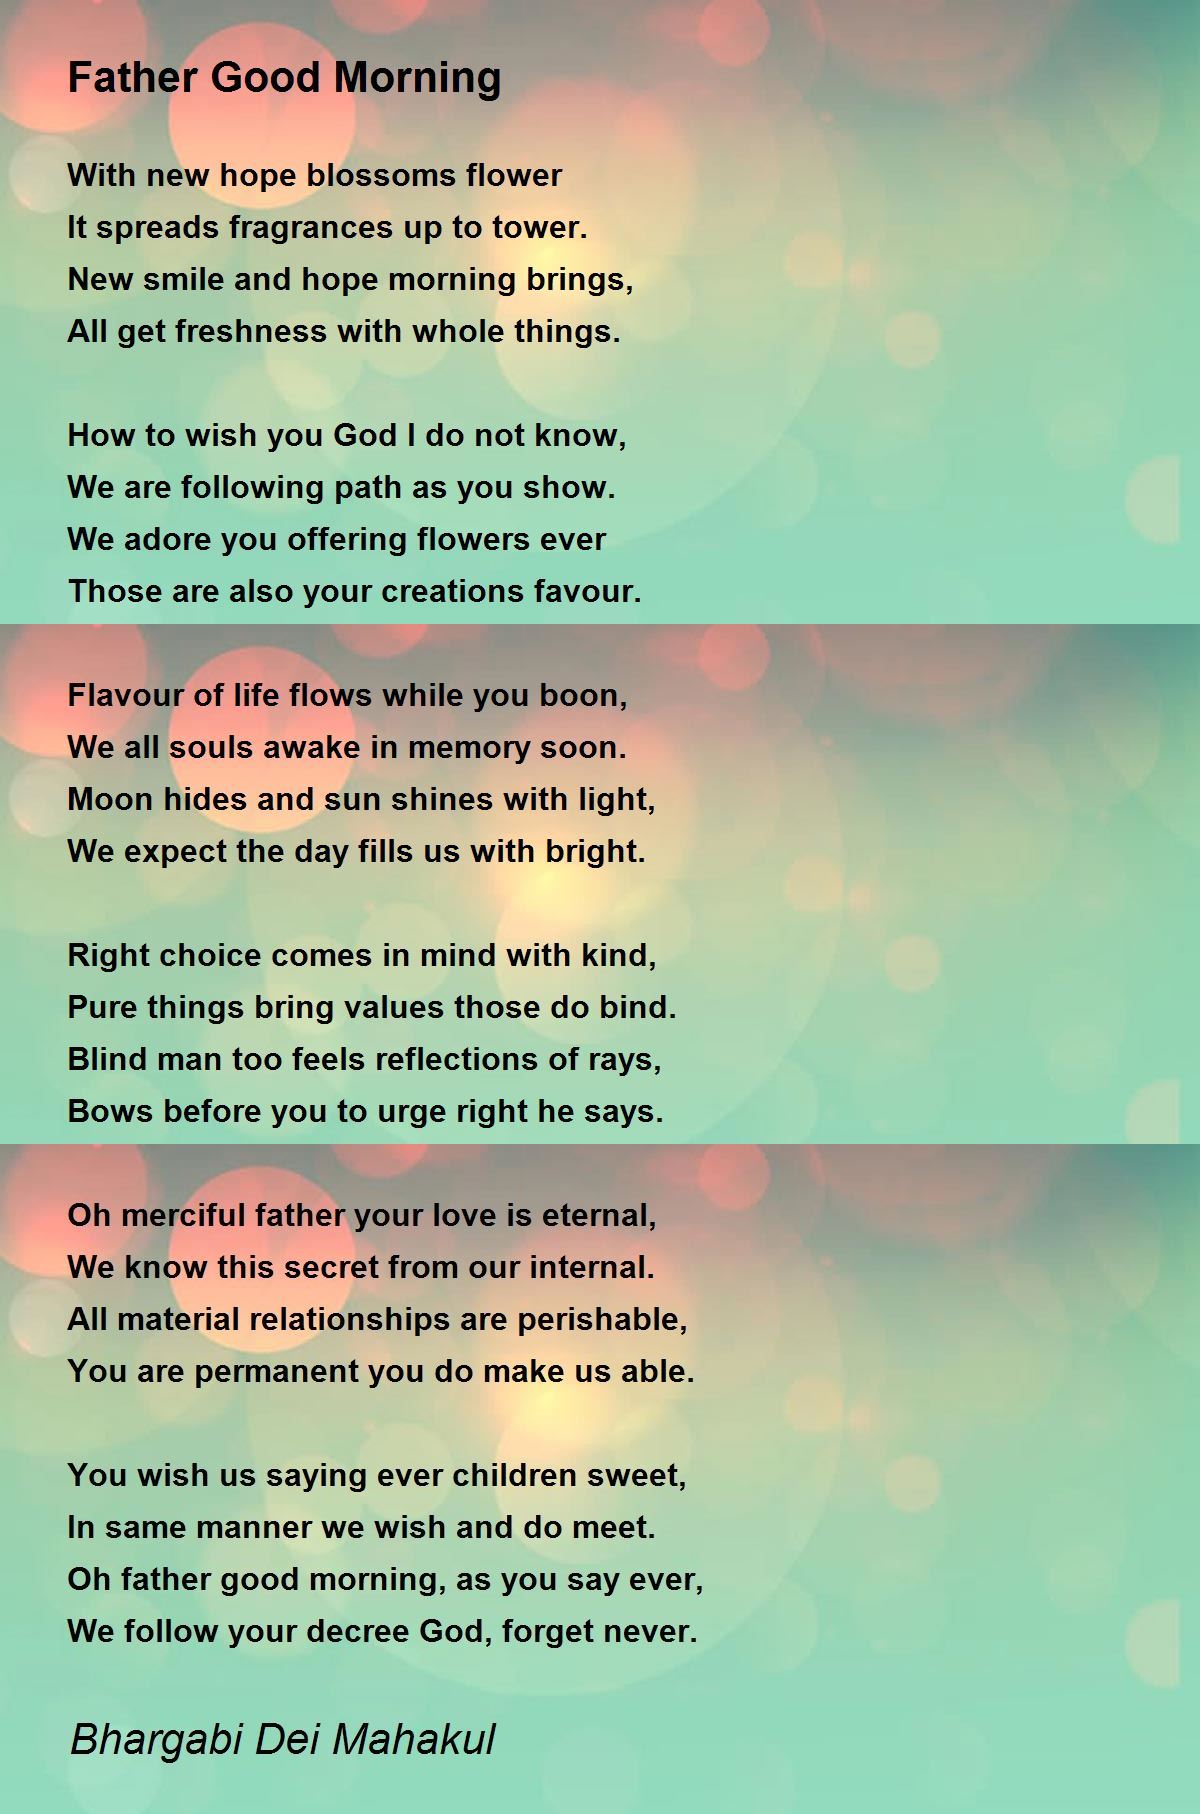 Father Good Morning - Father Good Morning Poem by Bhargabi Dei Mahakul